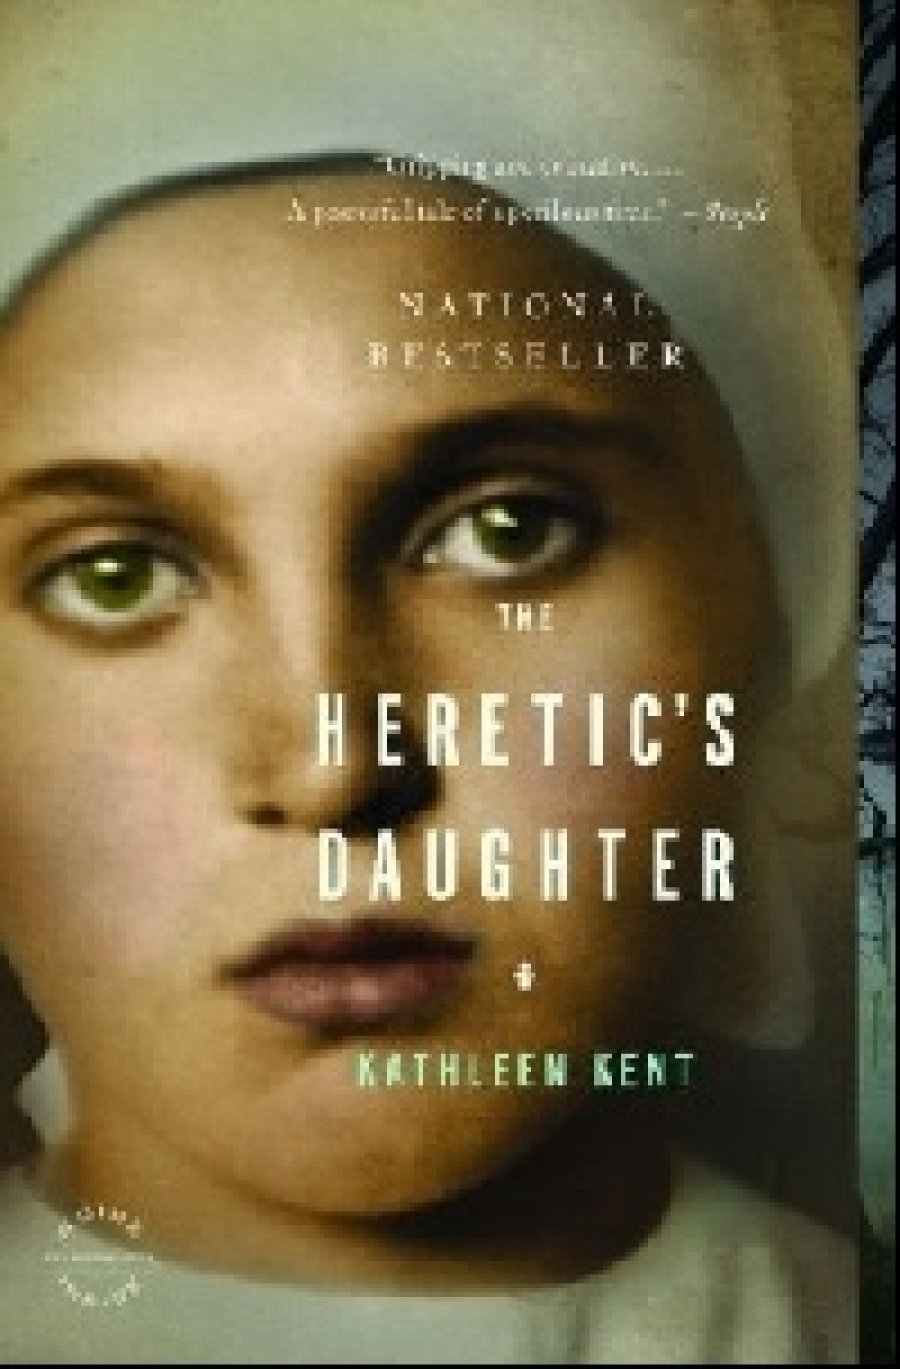 Kent, Kathleen The Heretic's Daughter (International): A Novel 